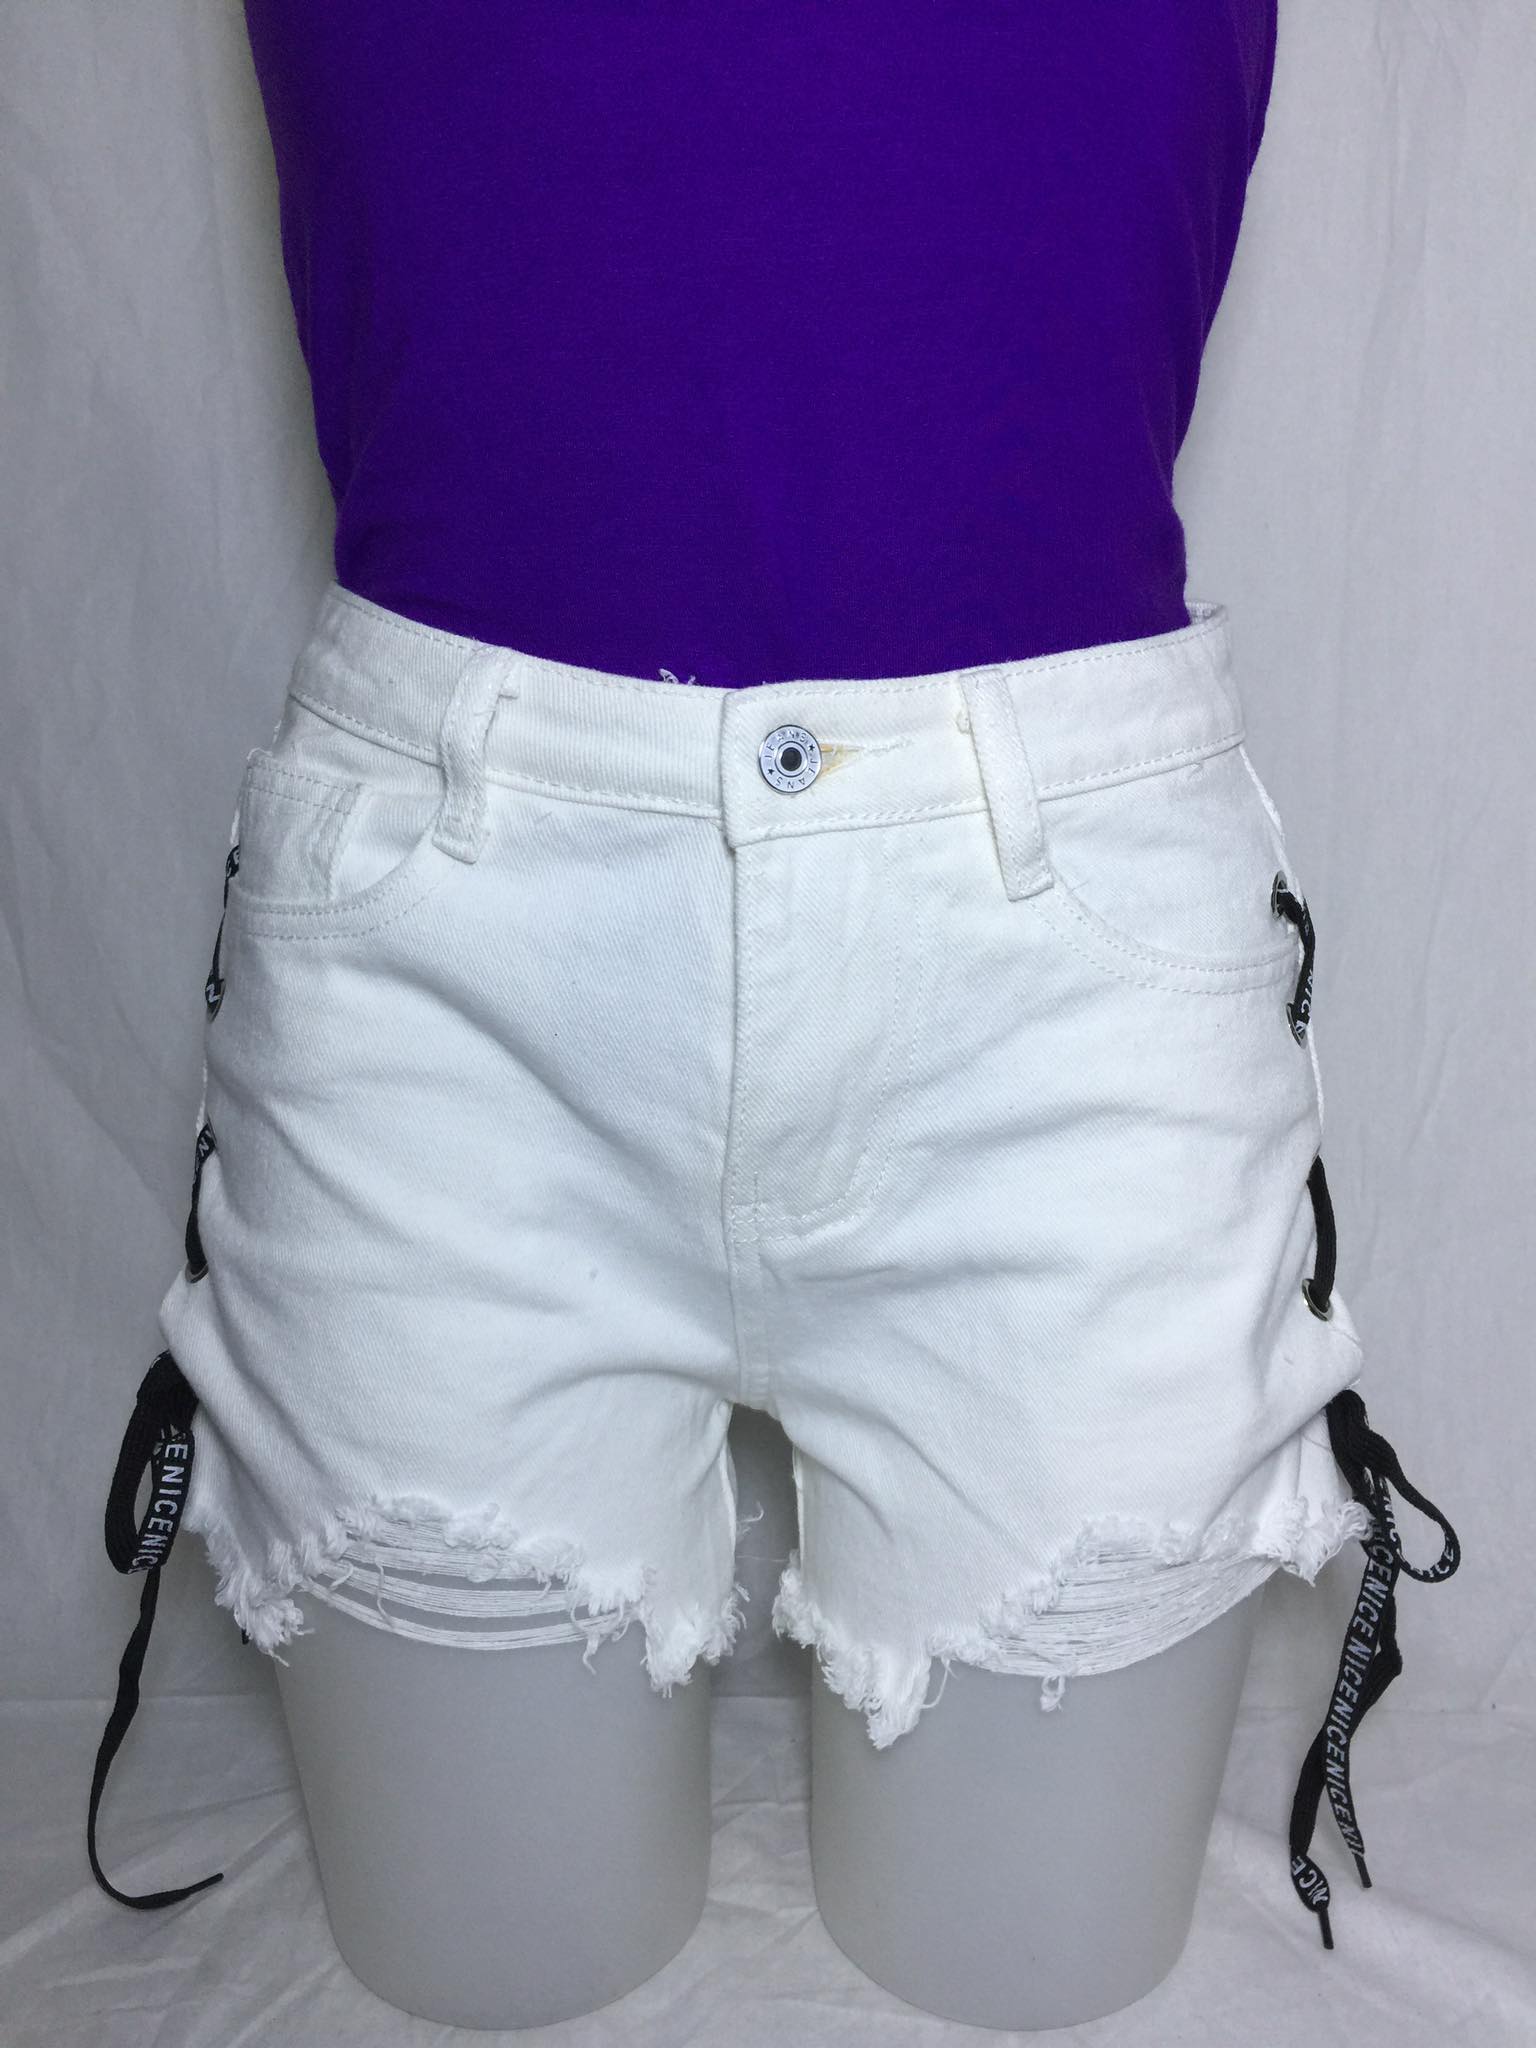 white lace denim shorts